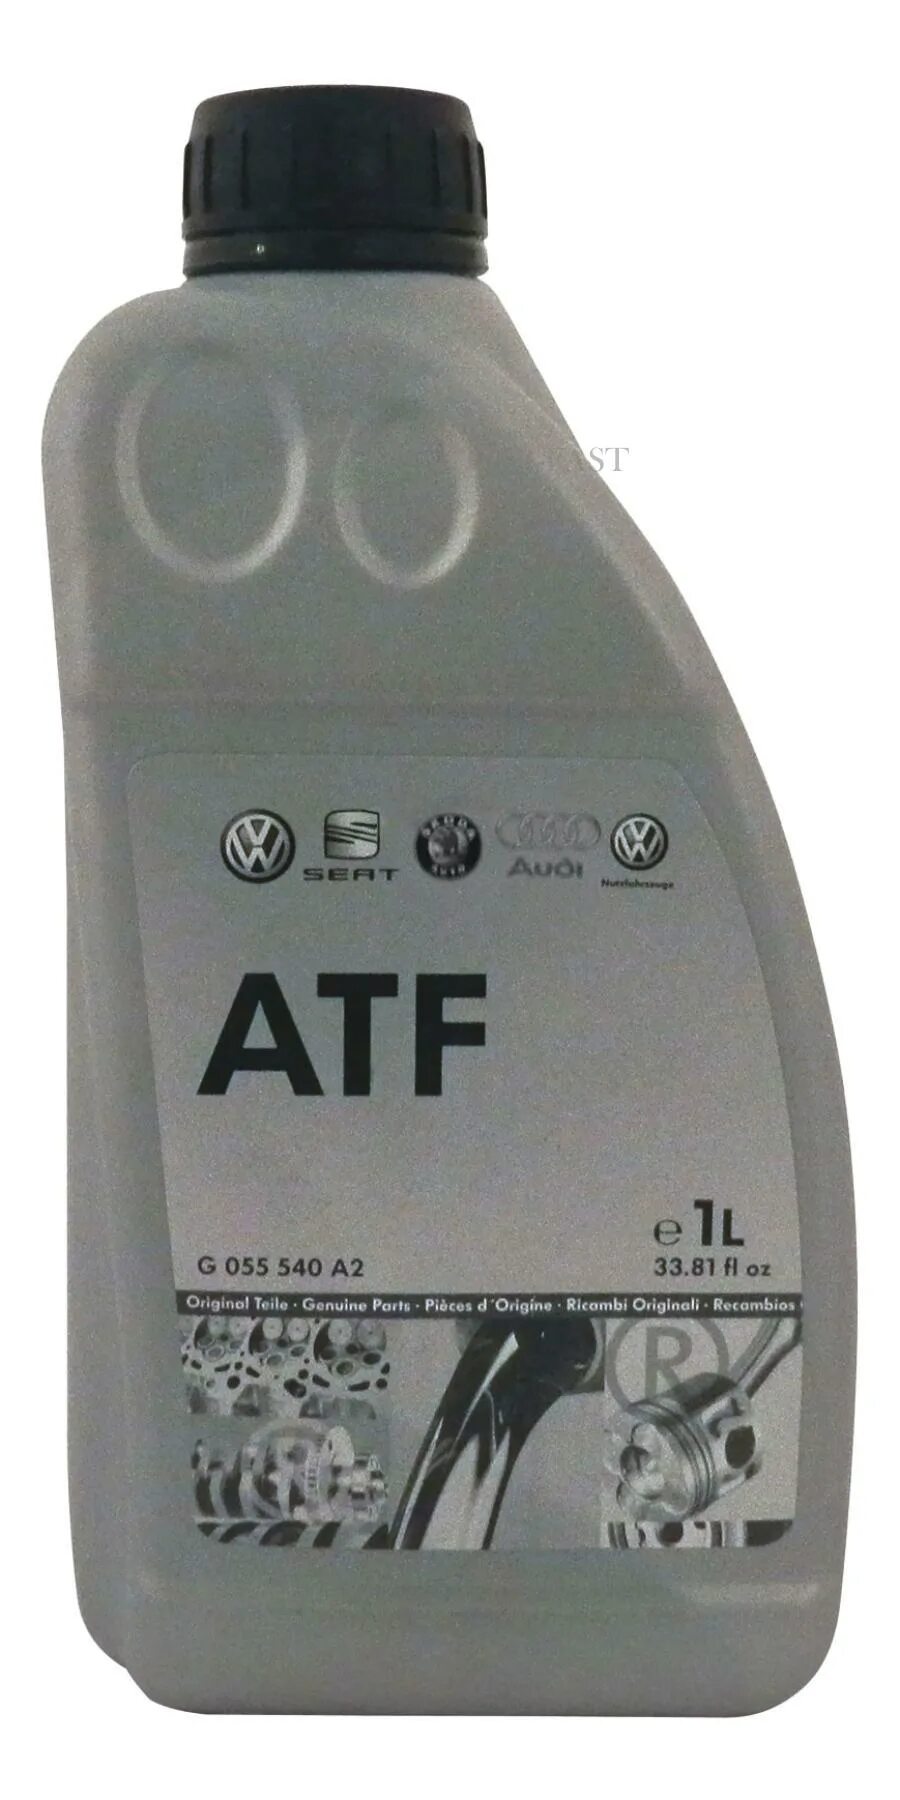 Atf vag. ATF g055540a2. ATF VAG G 055 540 a2. G055540a2. Масло трансмиссионное VAG ATF 1 Л.